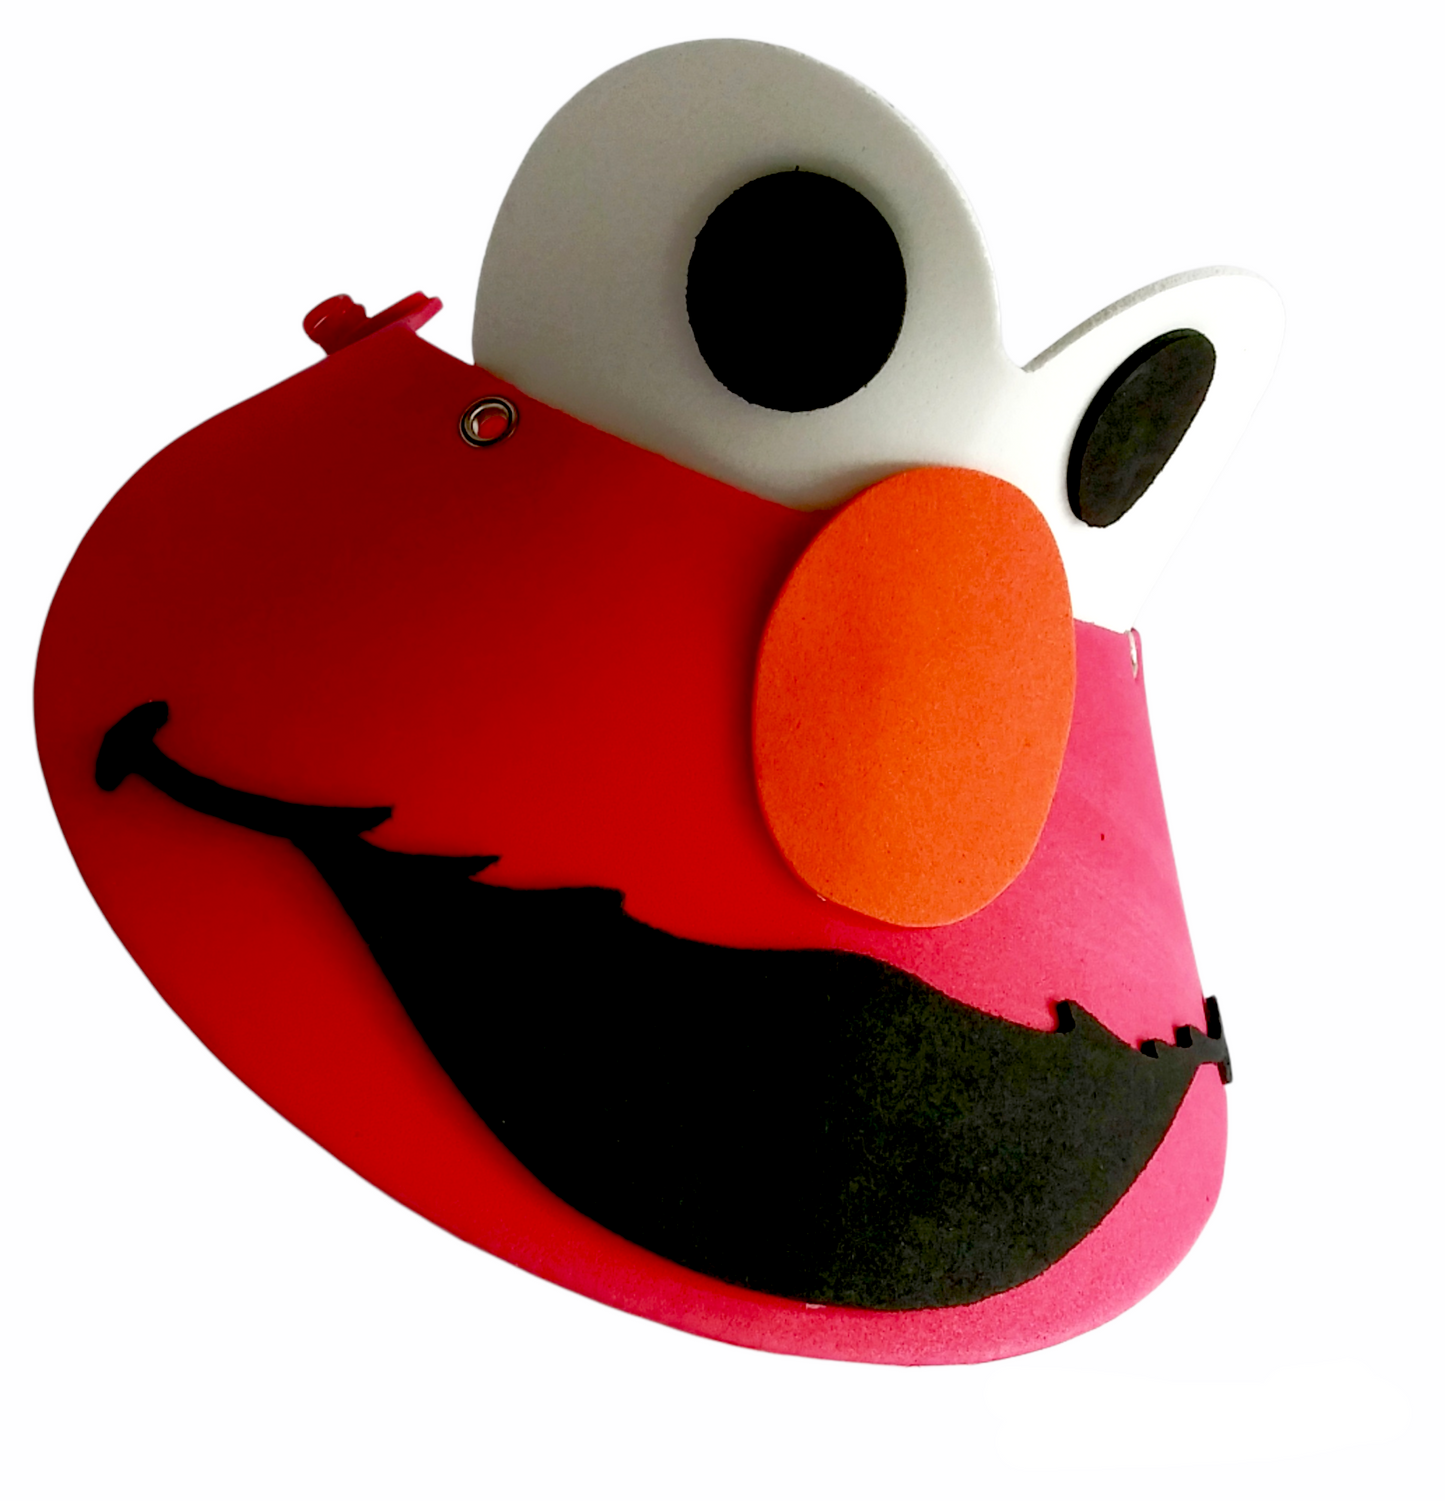 Elmo party hats - Elmo birthday hat - Elmo hat - Elmo visor